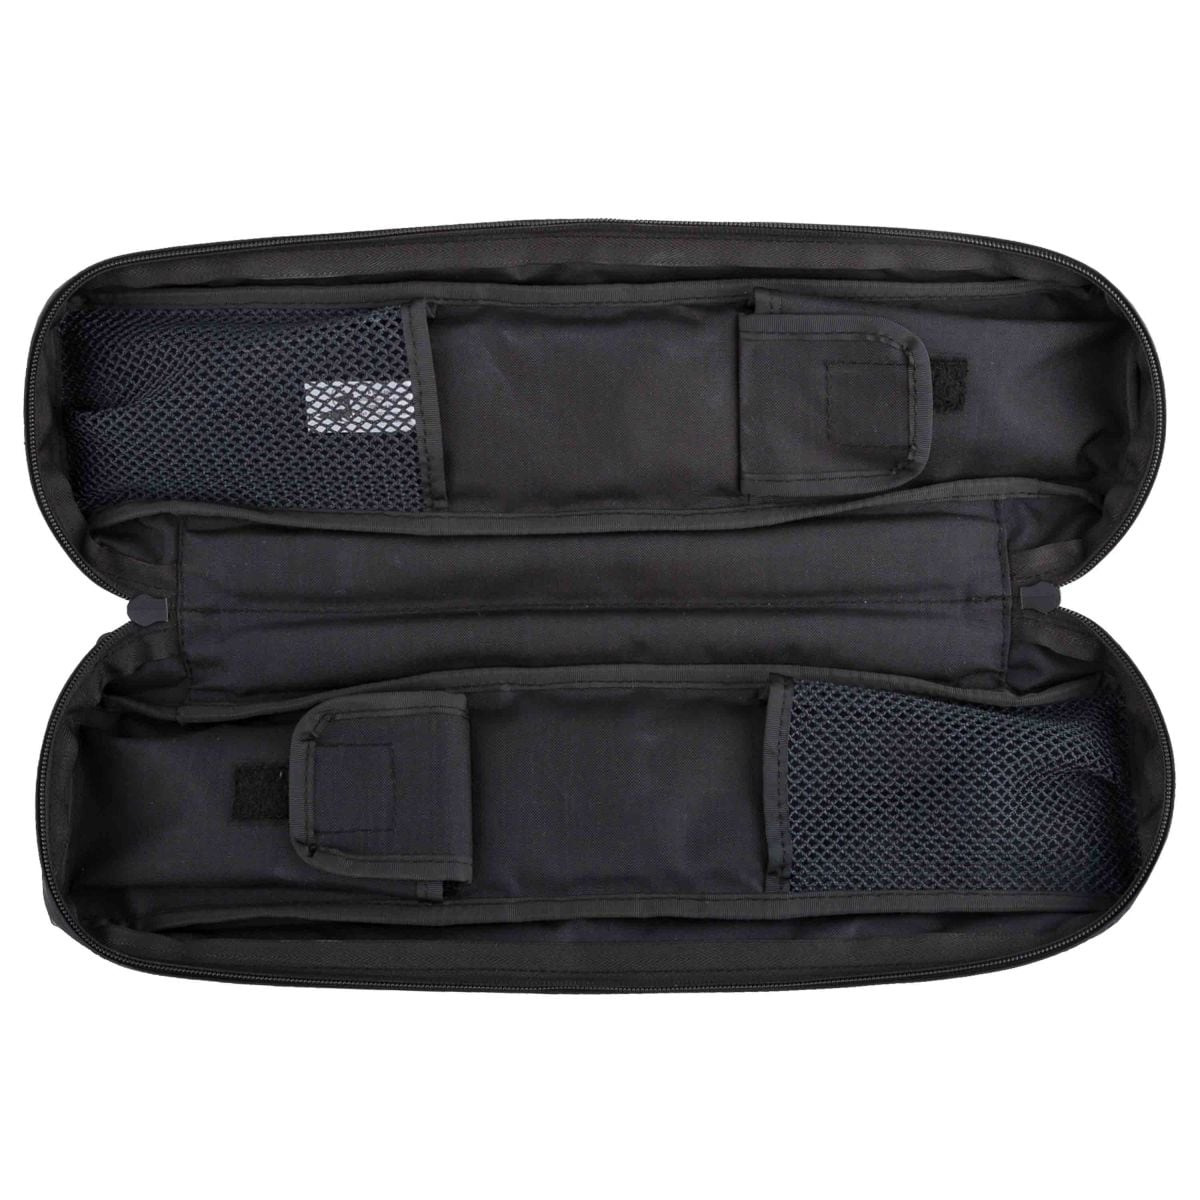 Zentauron Rifle Scope Bag 55 cm black